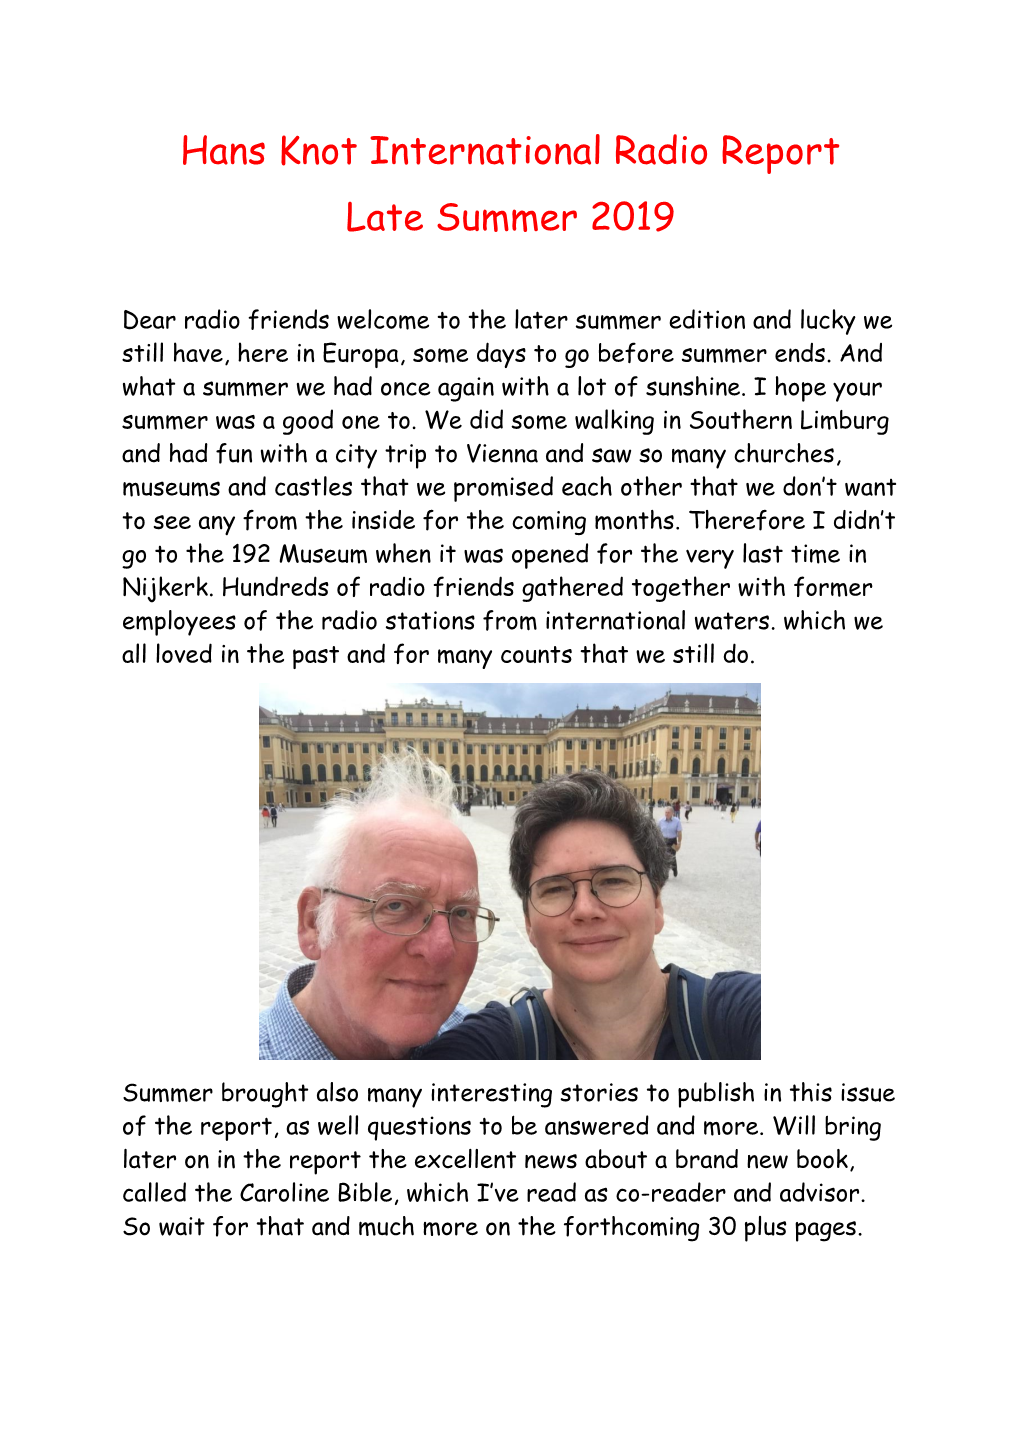 Hans Knot International Radio Report Late Summer 2019